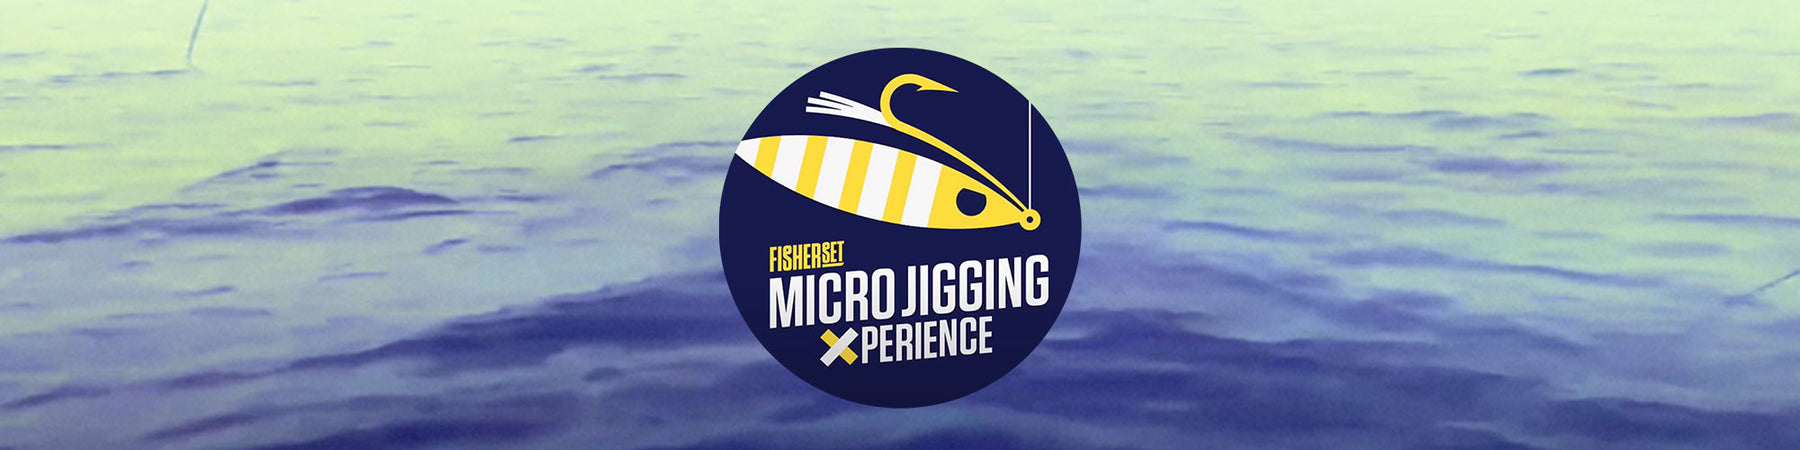 FisherSet Micro Jigging Xperience ¿Te apuntas?